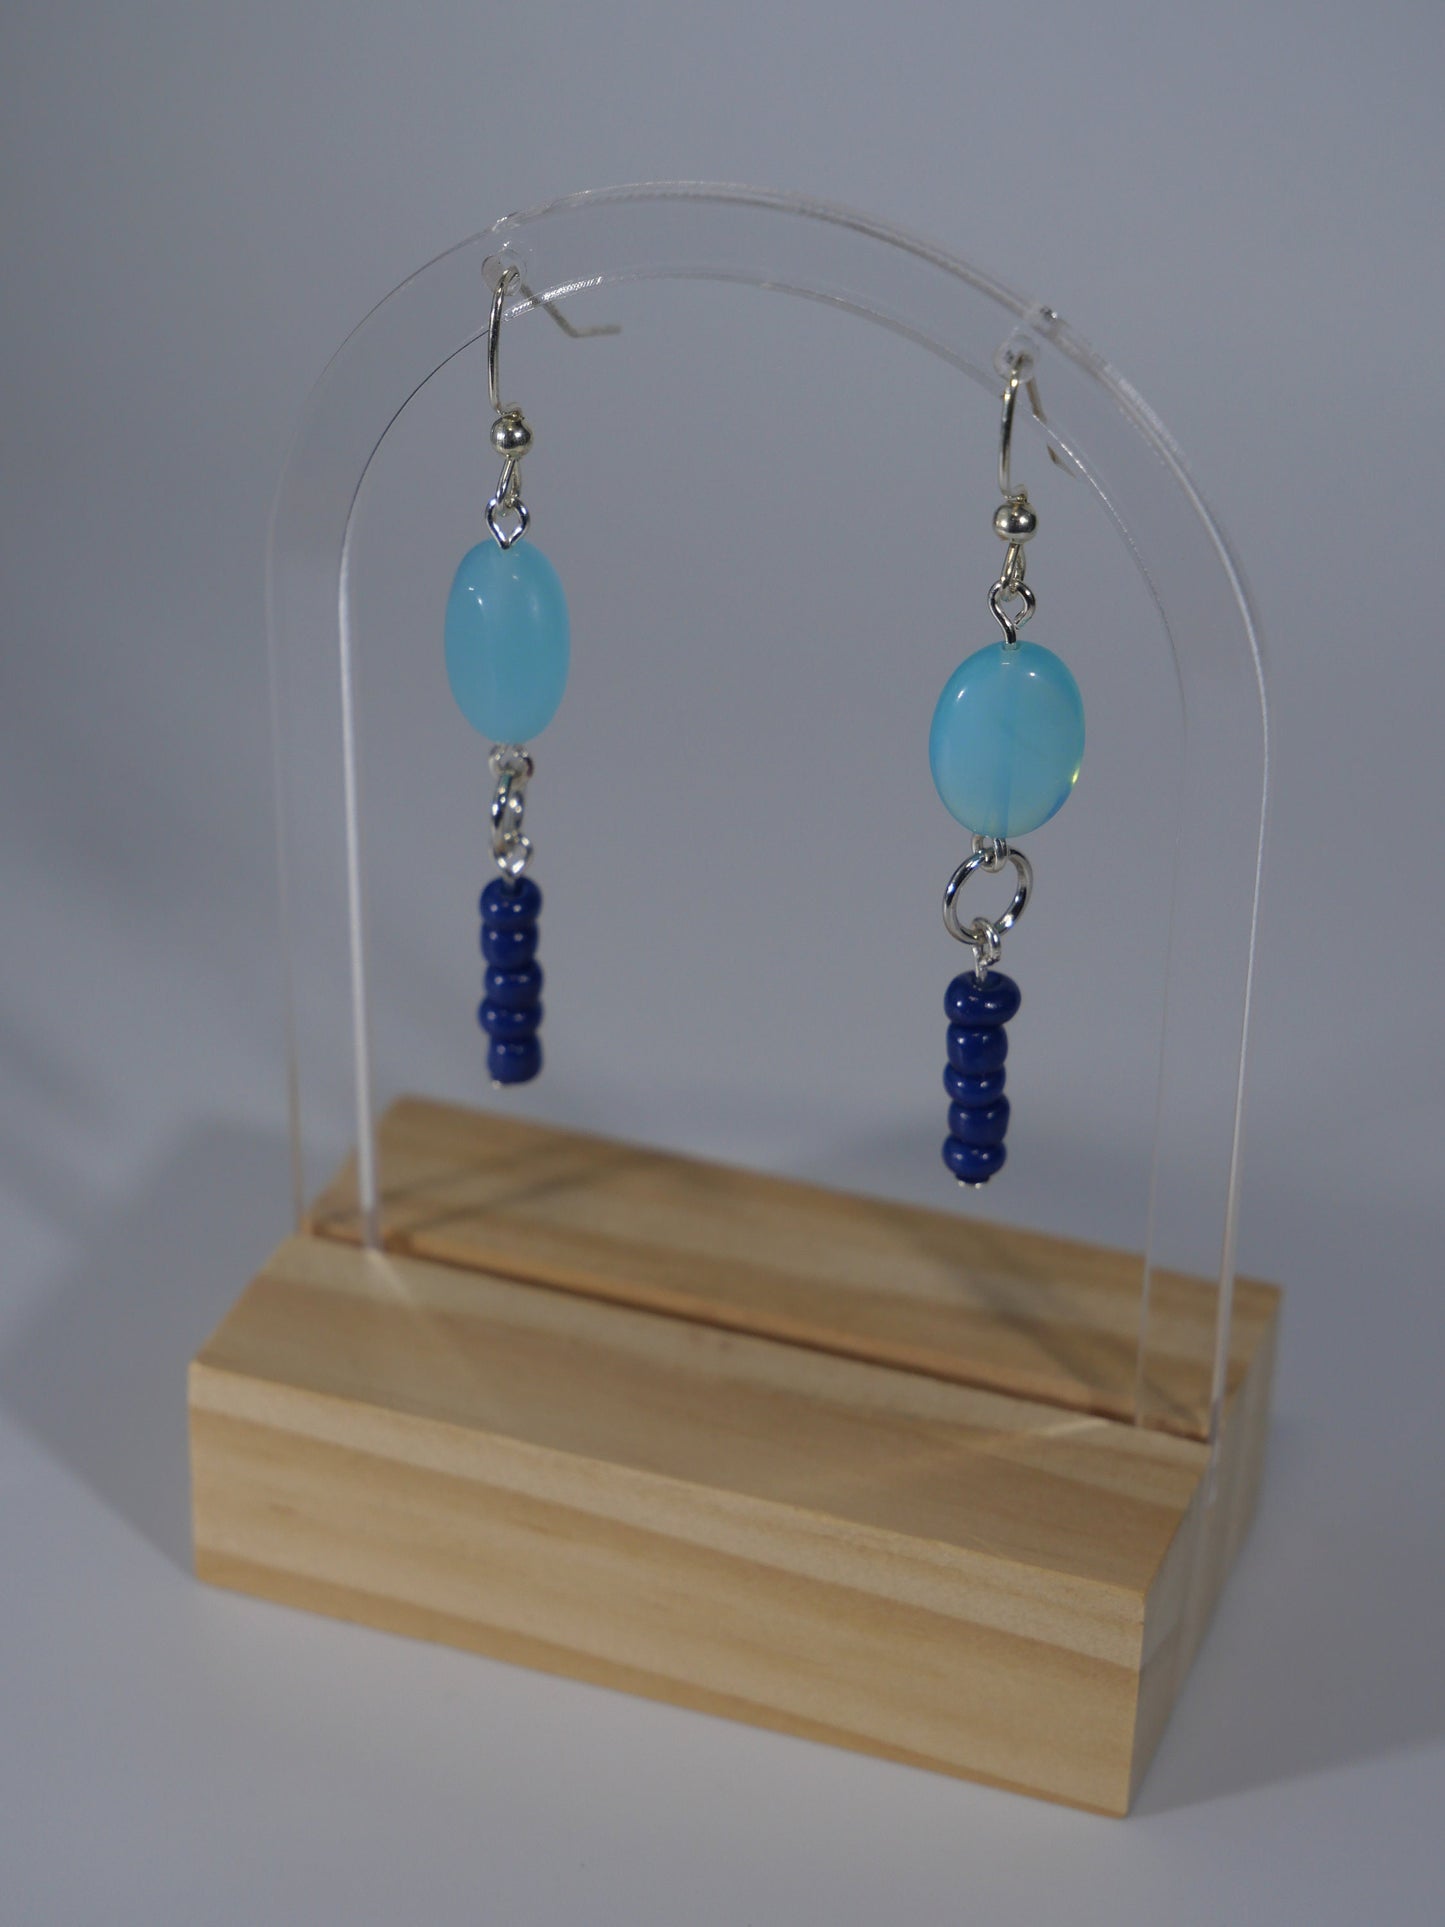 Dangle and Drop Earrings, Silver & Bright Blue Dangle Earrings - Coastal Style - Handmade in Maine